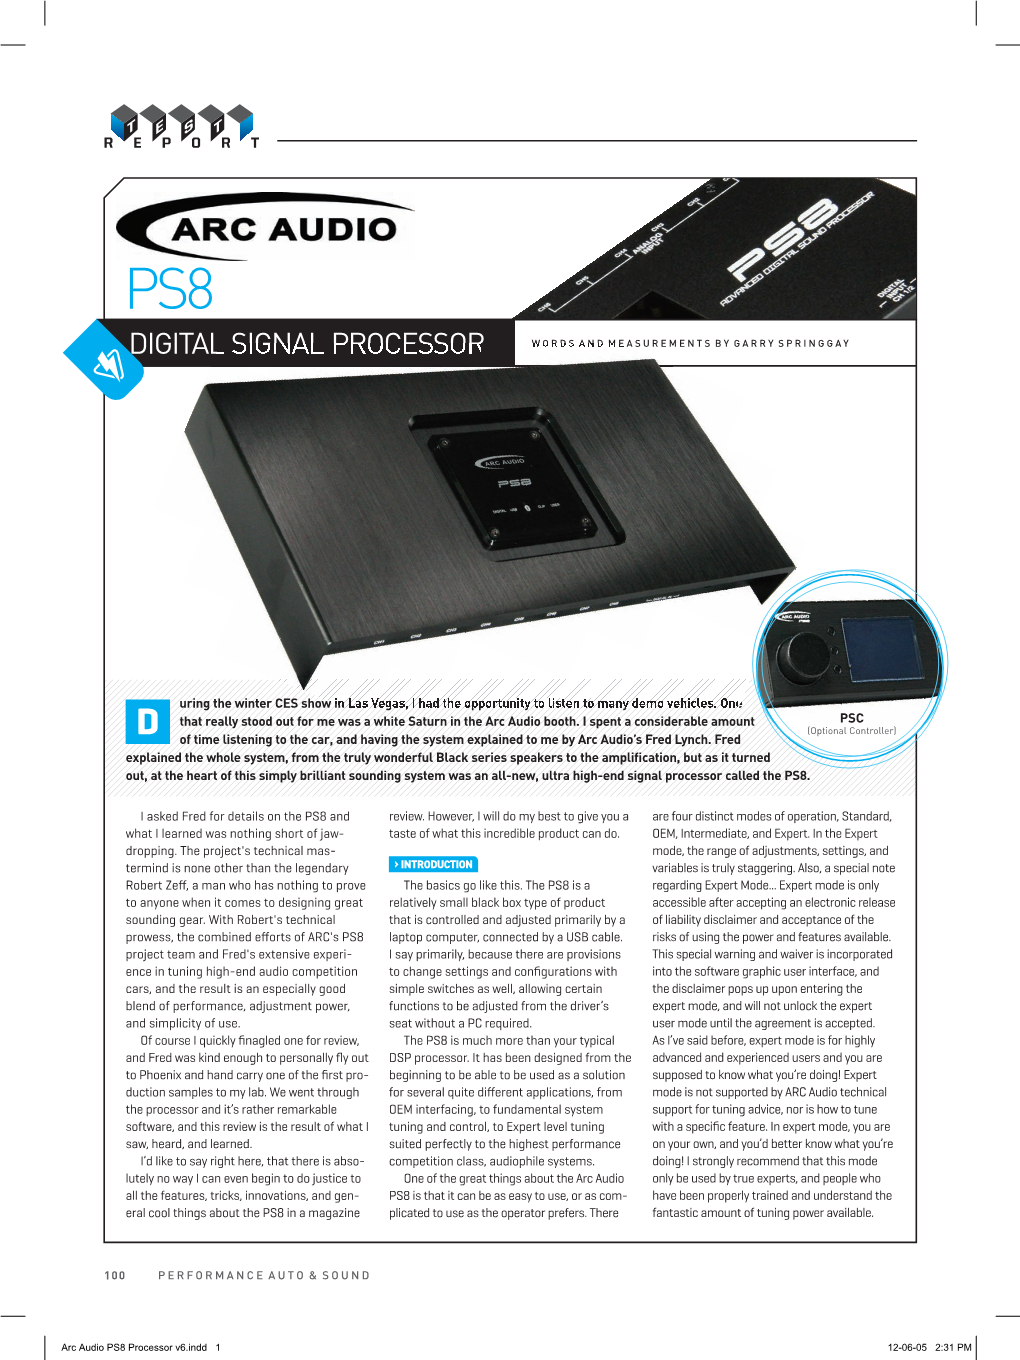 Arc Audio PS8 Processor V6.Indd 1 12-06-05 2:31 PM Digital Signal Processor Arc Audio PS8